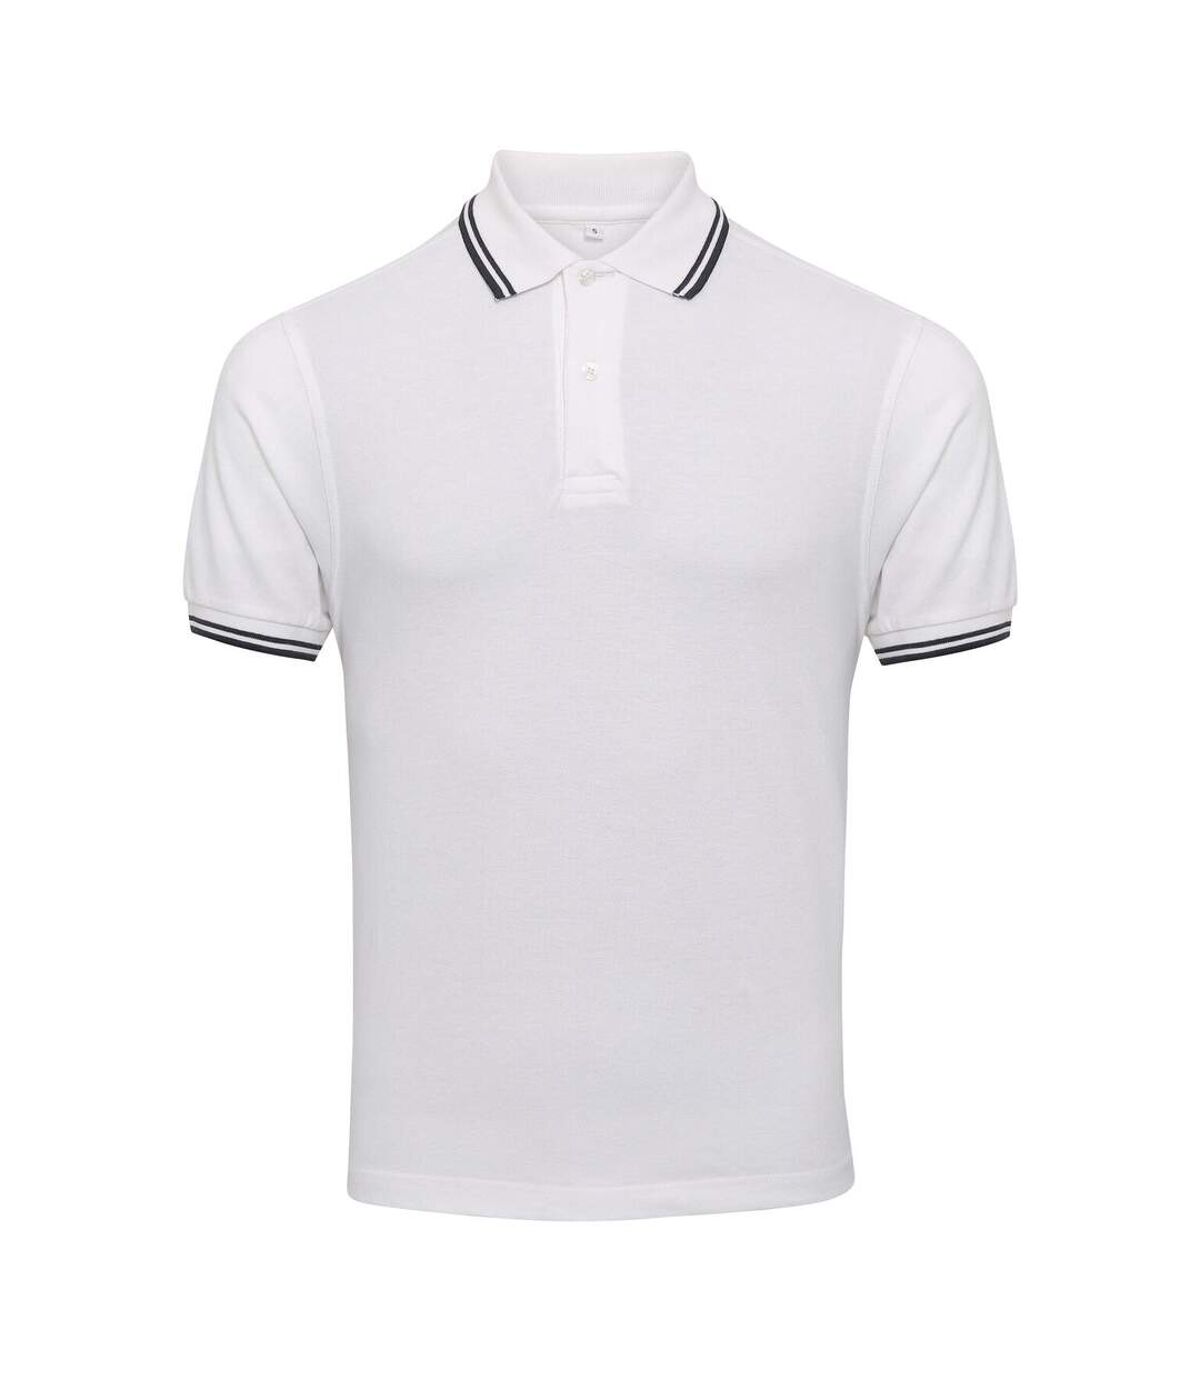 AWDis Mens - T-shirt POLO - Hommes (Blanc / bleu marine) - UTPC3155